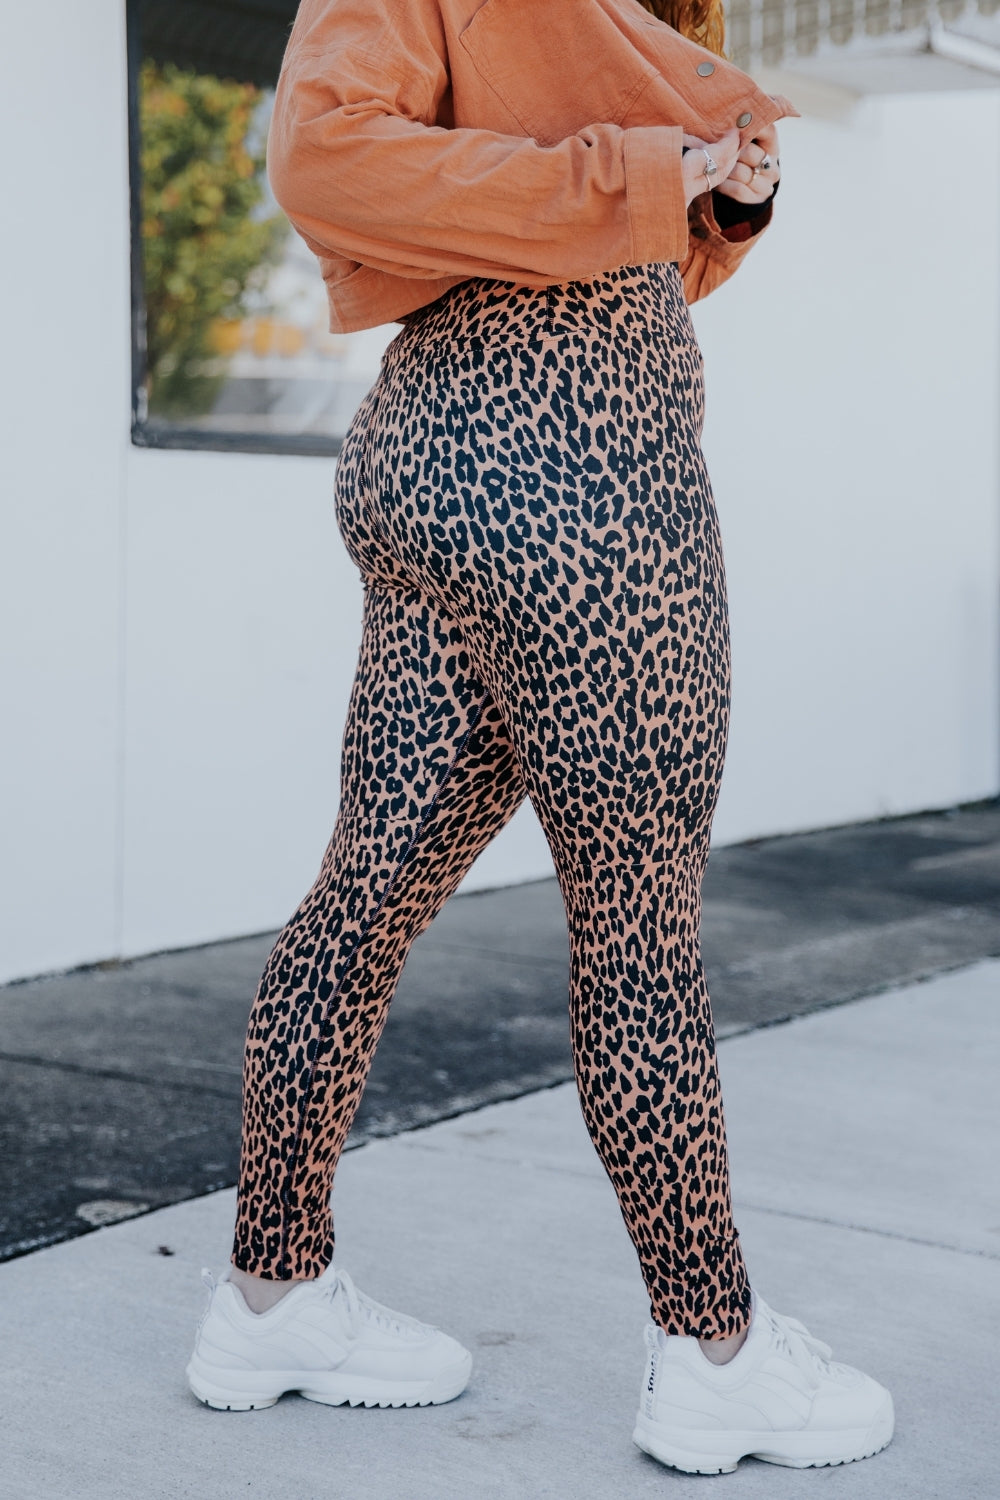 Leopard Flared Leggings, Animal Cheetah Print High Waisted Yoga